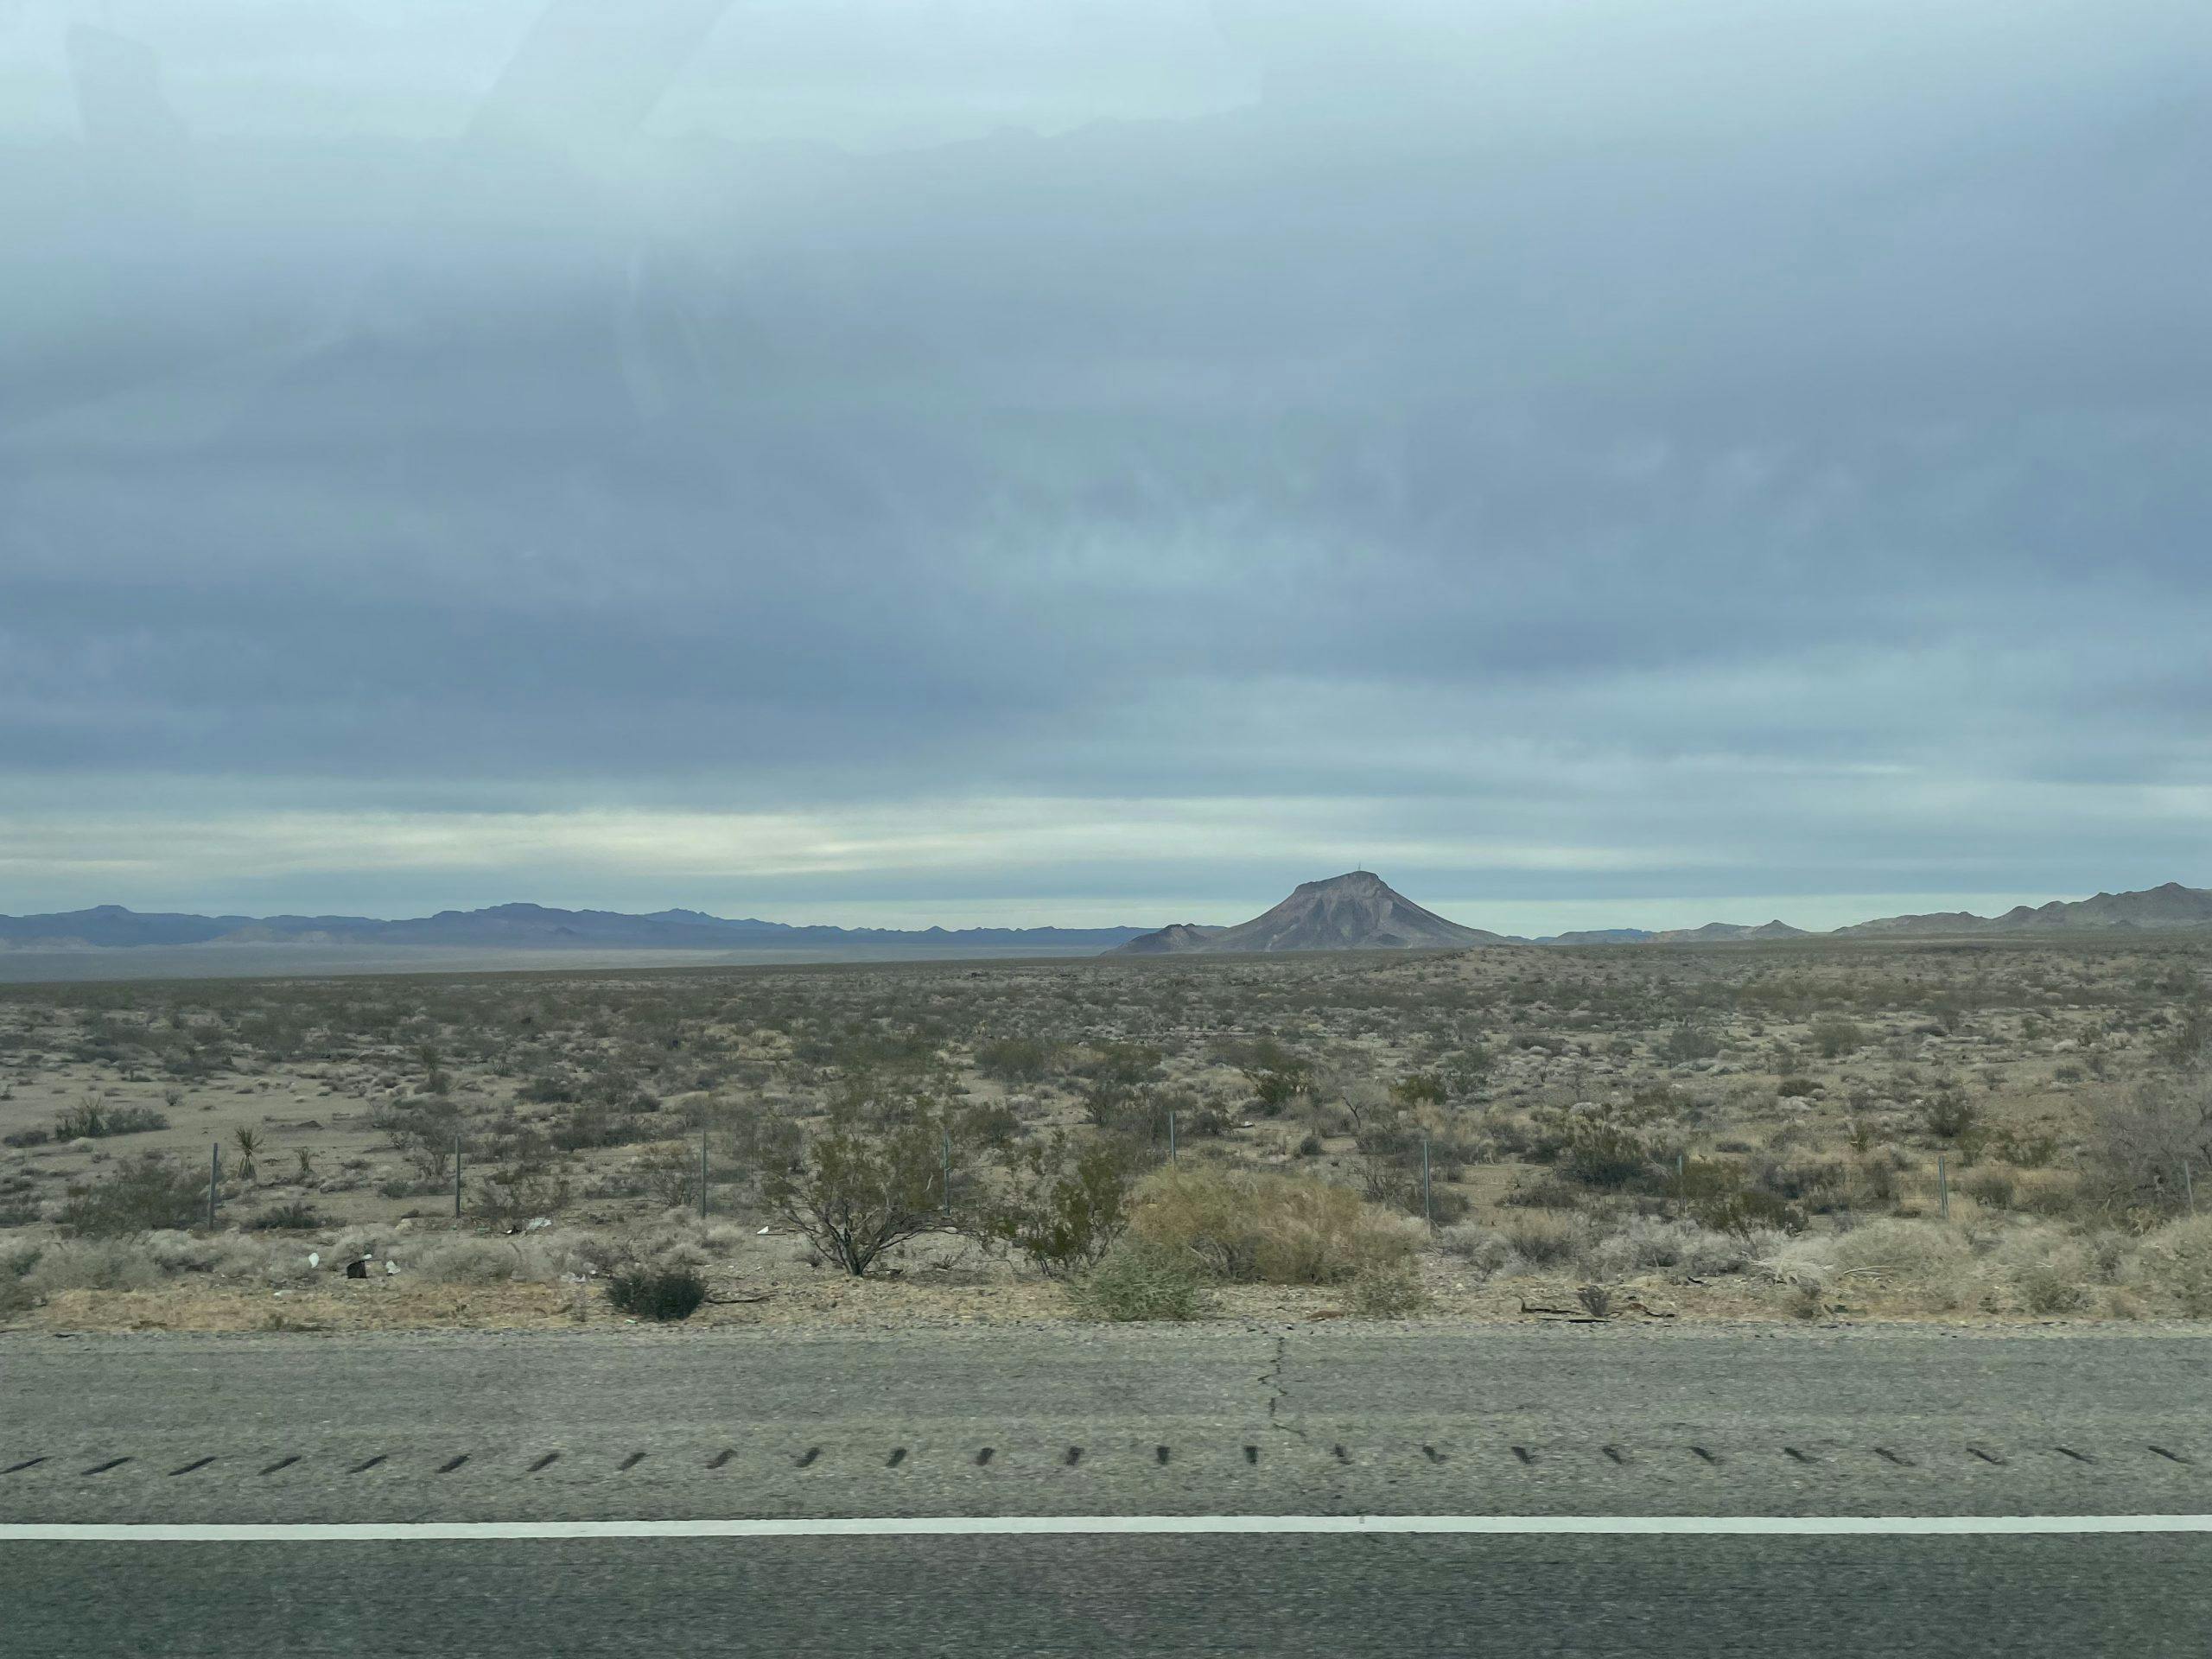 Arizona desert hills